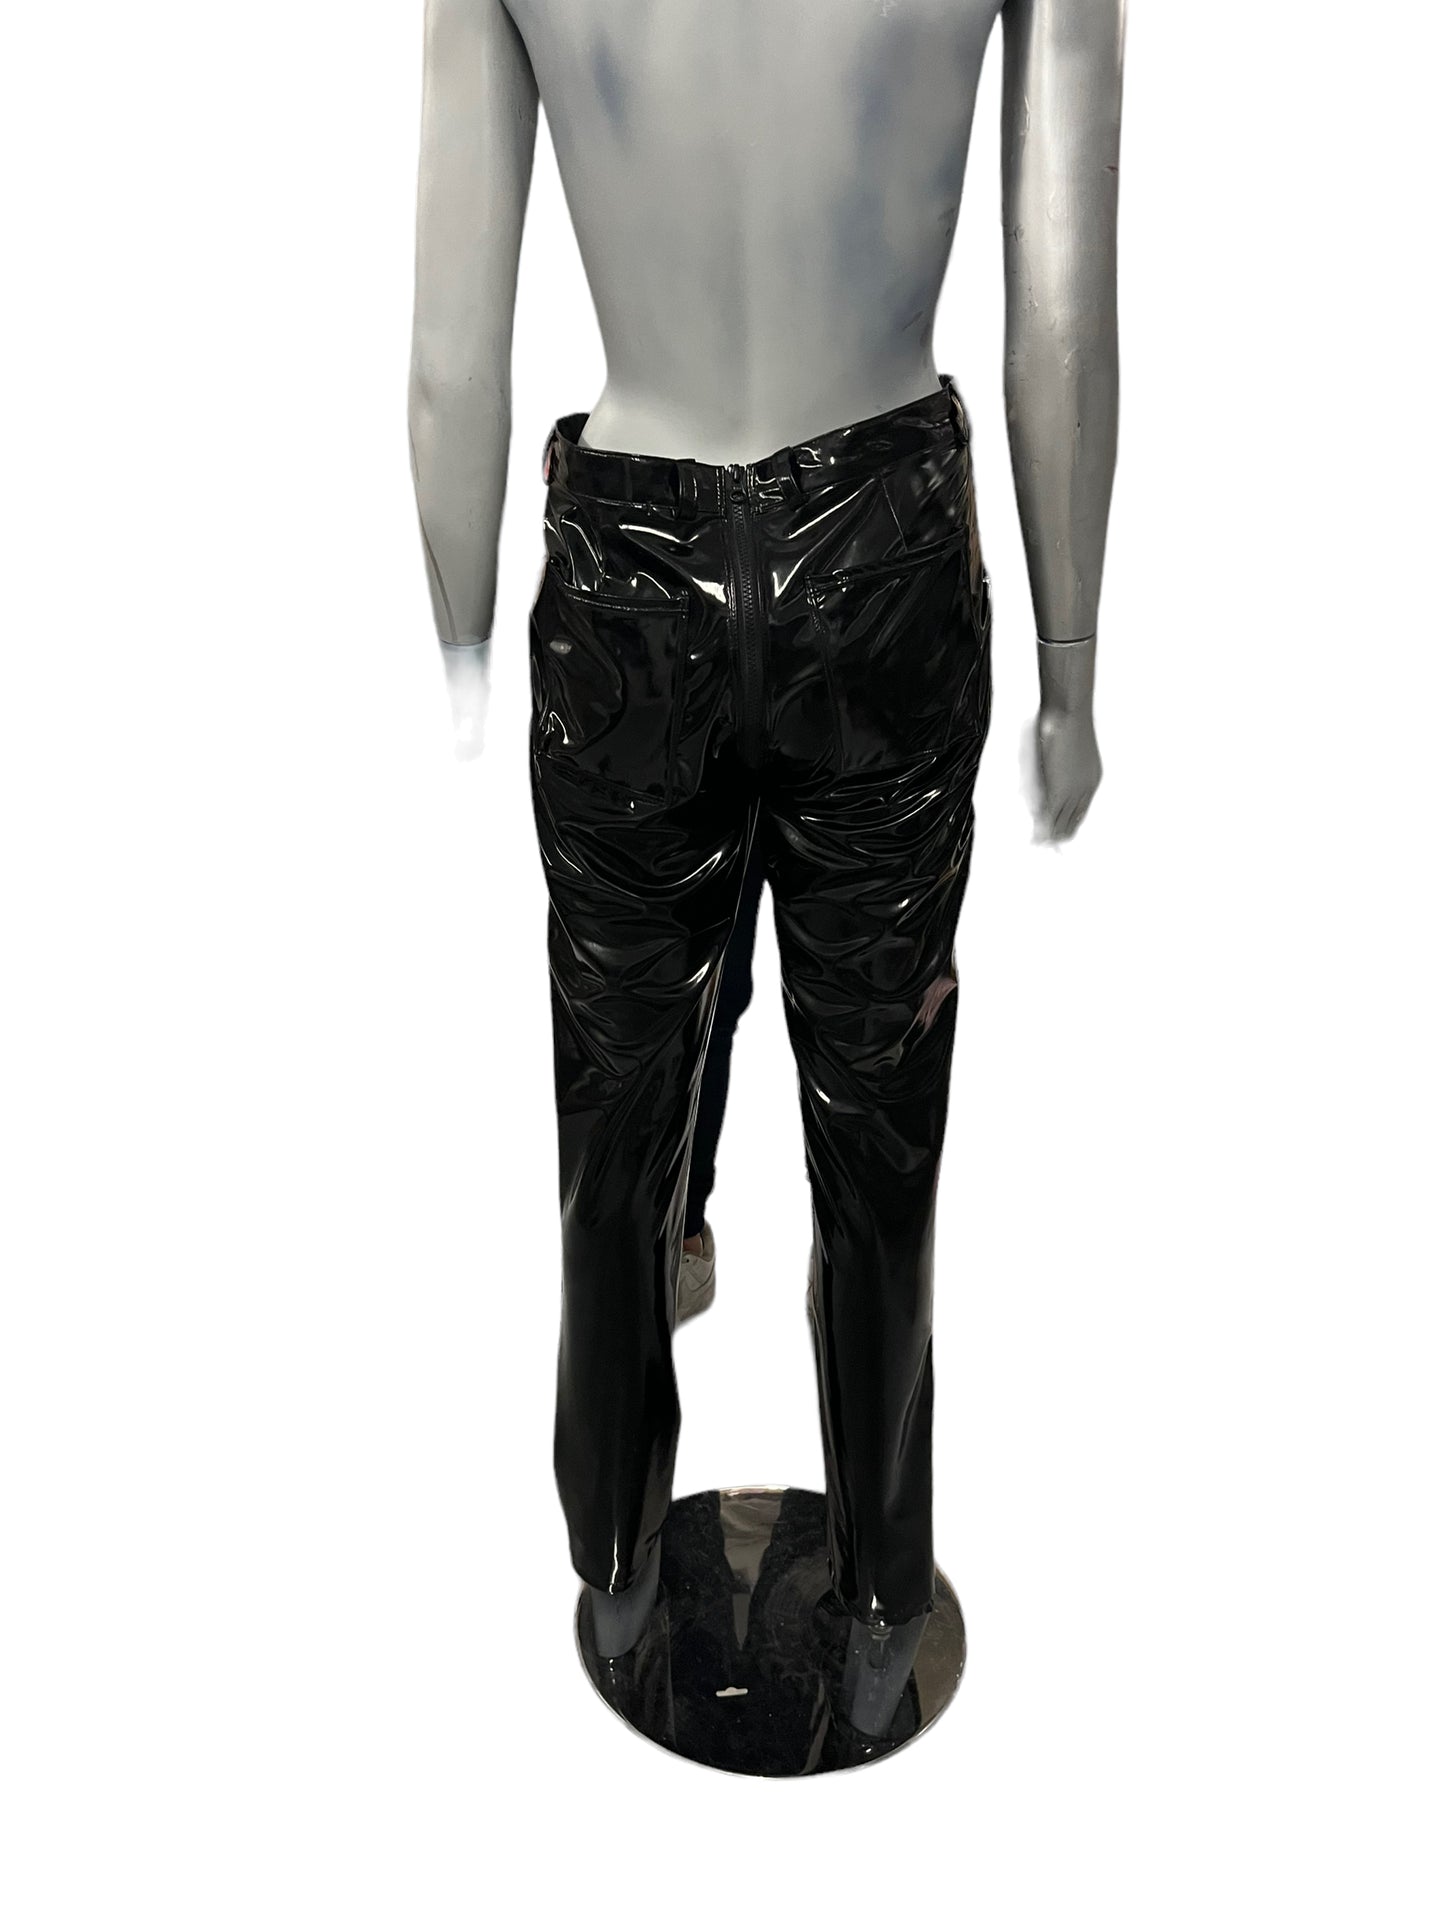 Fashion World - LL163 - Black Pants With Patterns